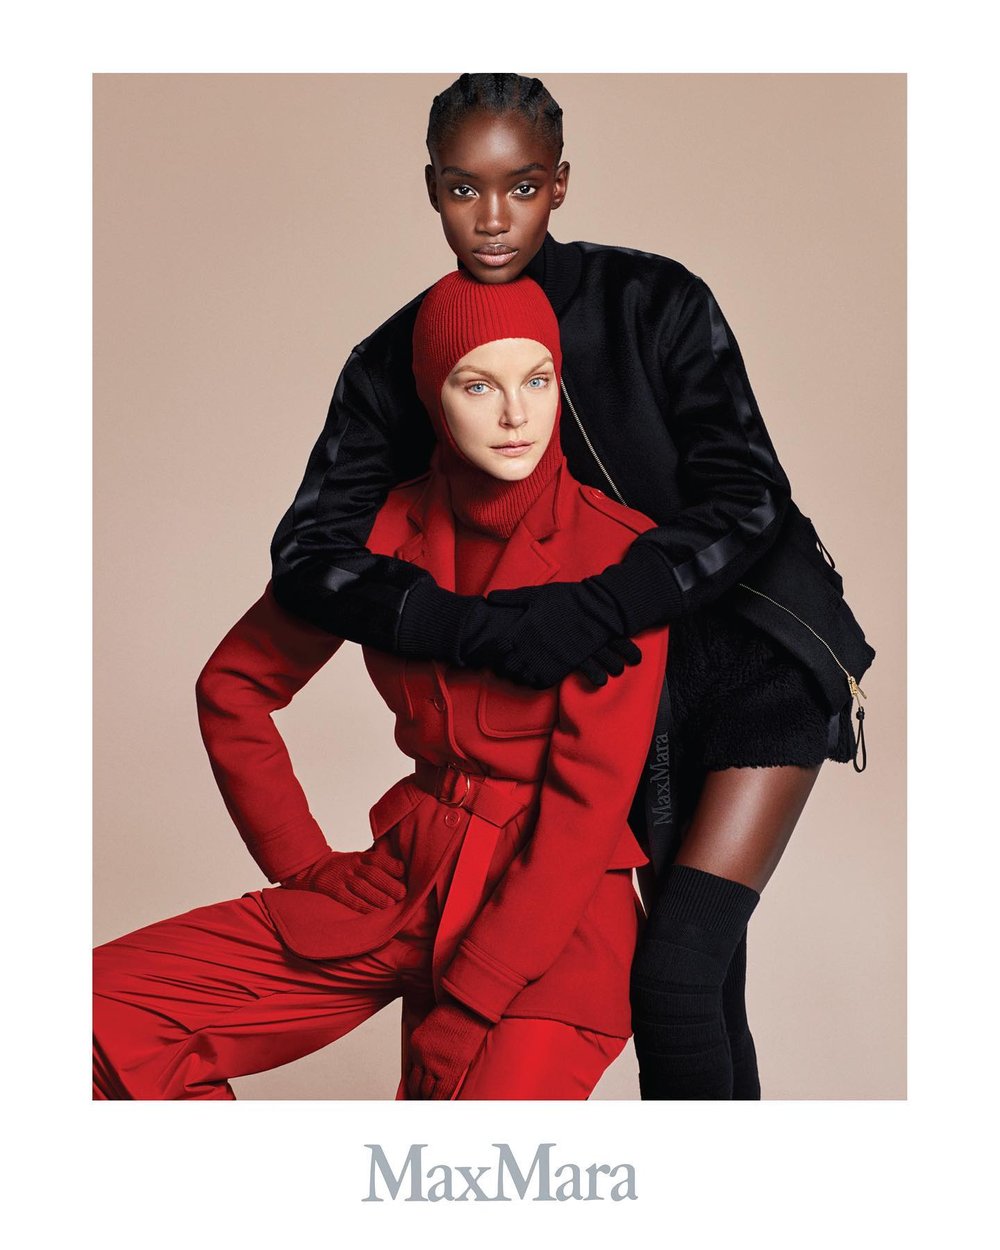 Eve Jobs Louis Vuitton Twist Winter 2022 Campaign Photos